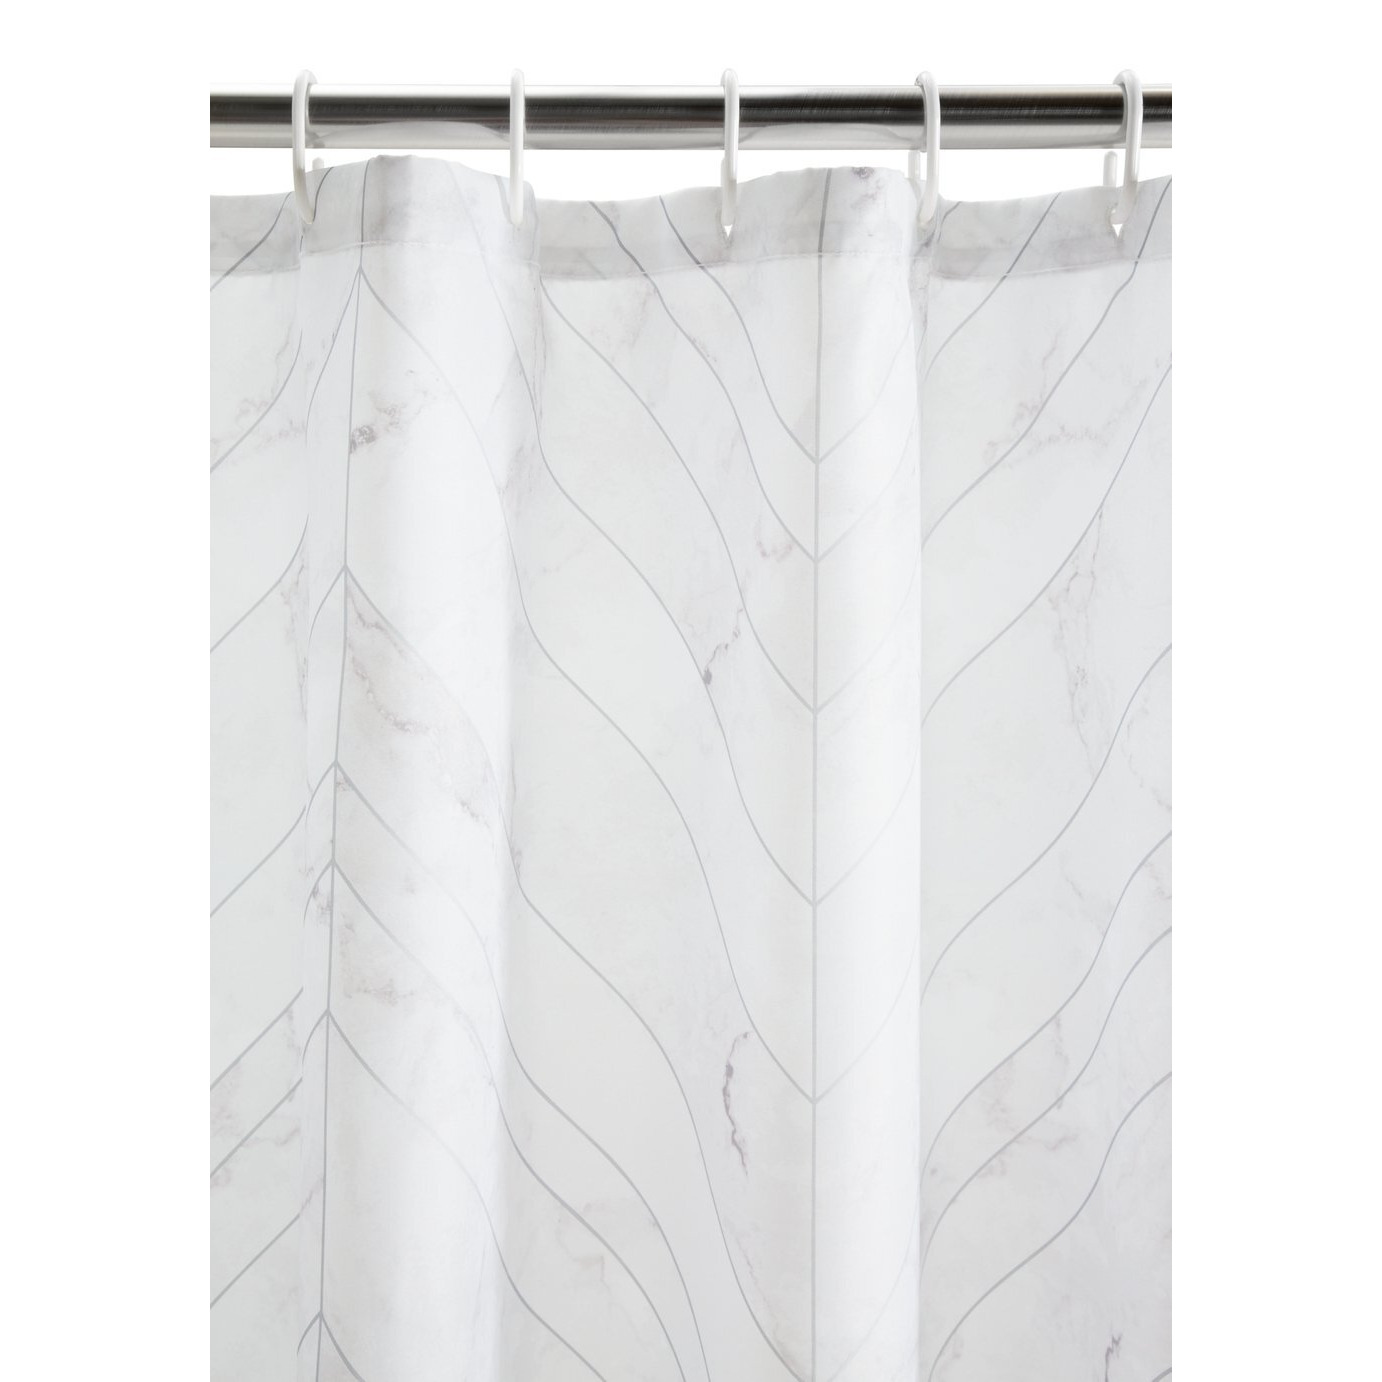 Habitat Marble Metallic Shower Curtain - image 1